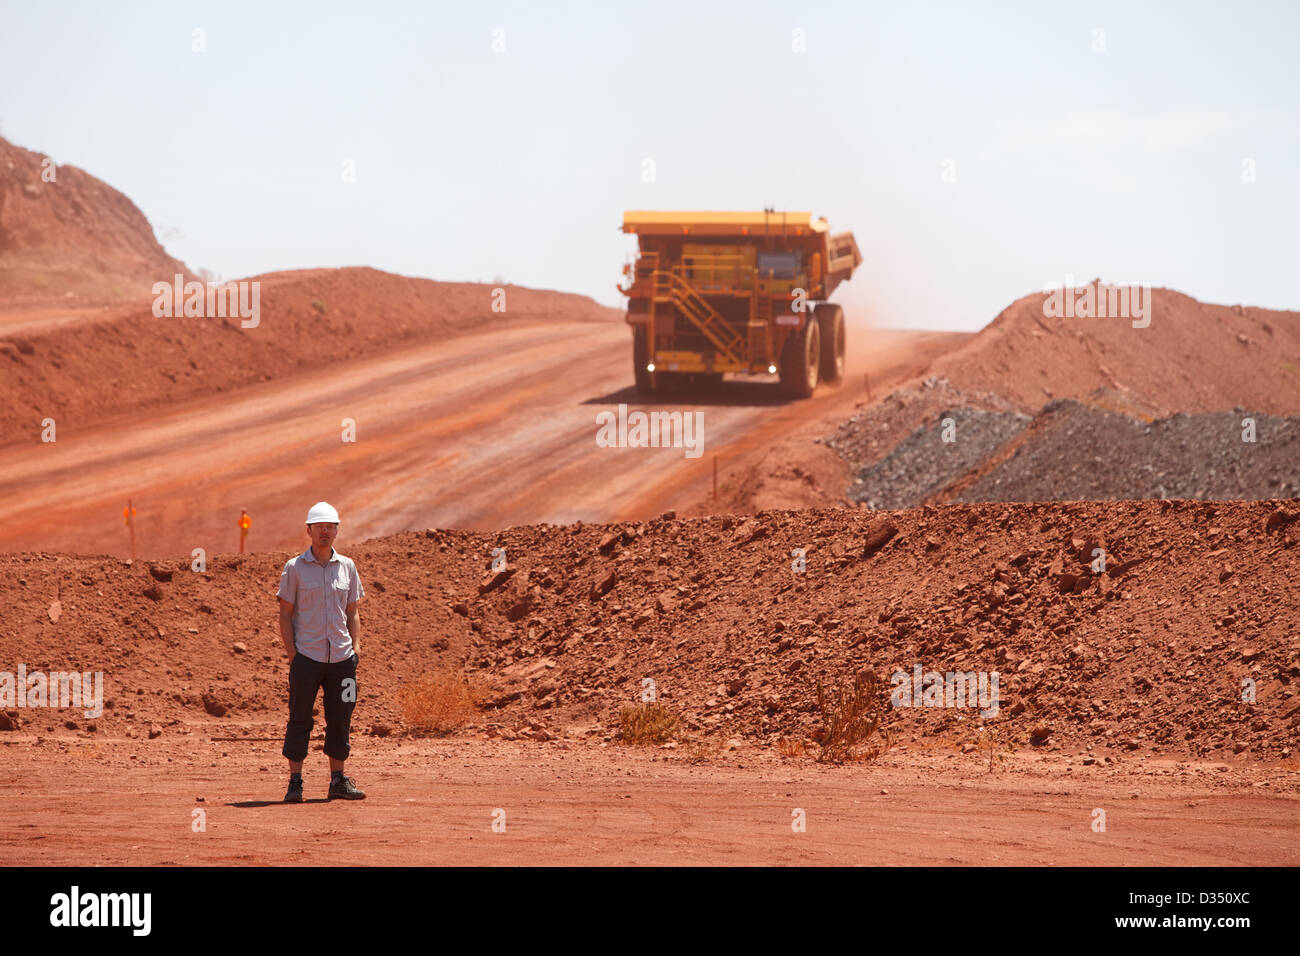 Mining truck working in iron ore mines, Western Australia Stock Photo